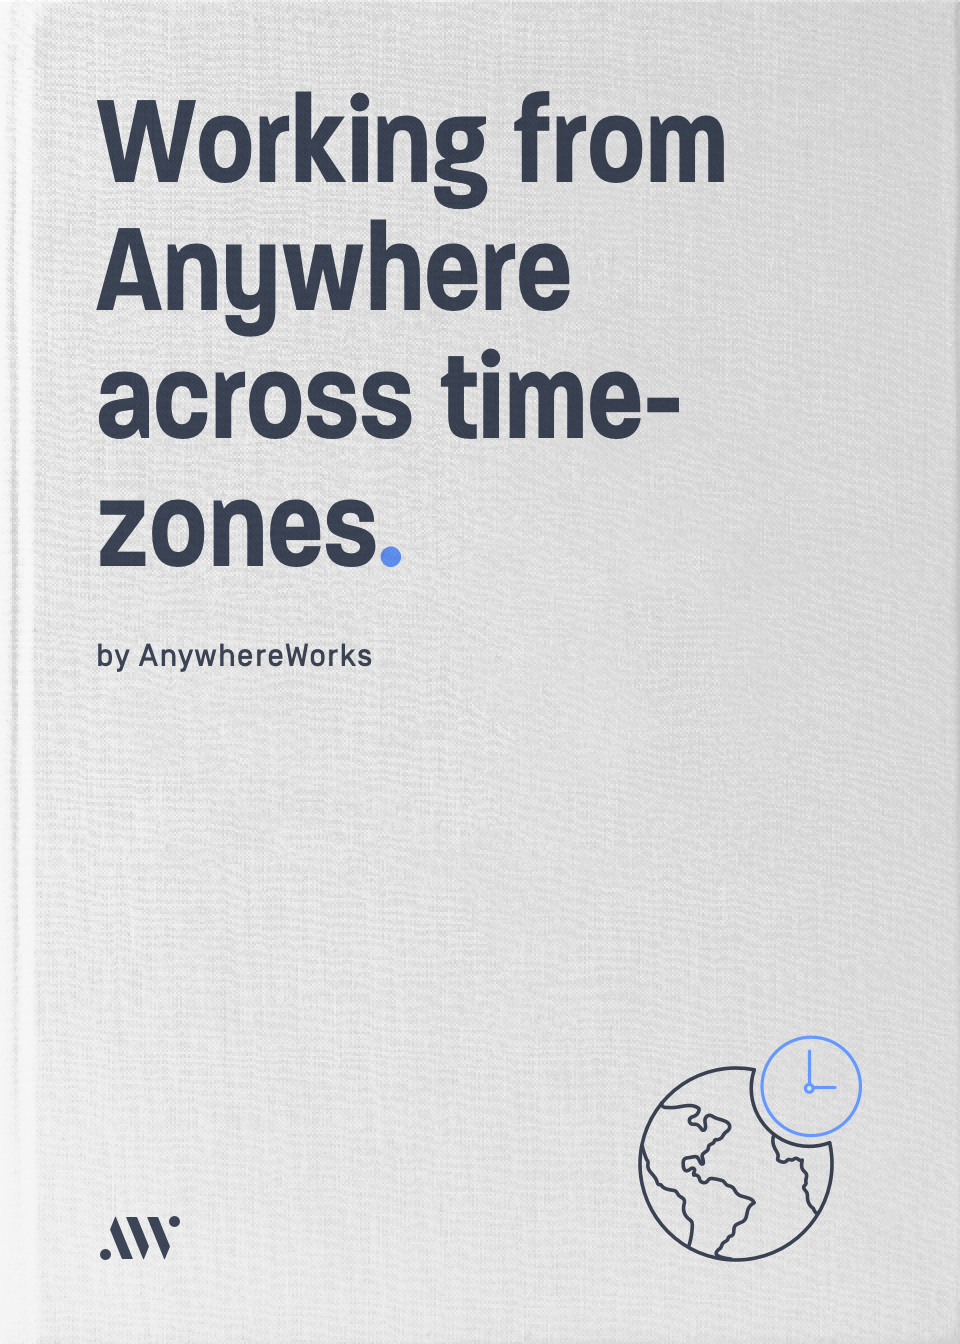 plan meeting across time zones